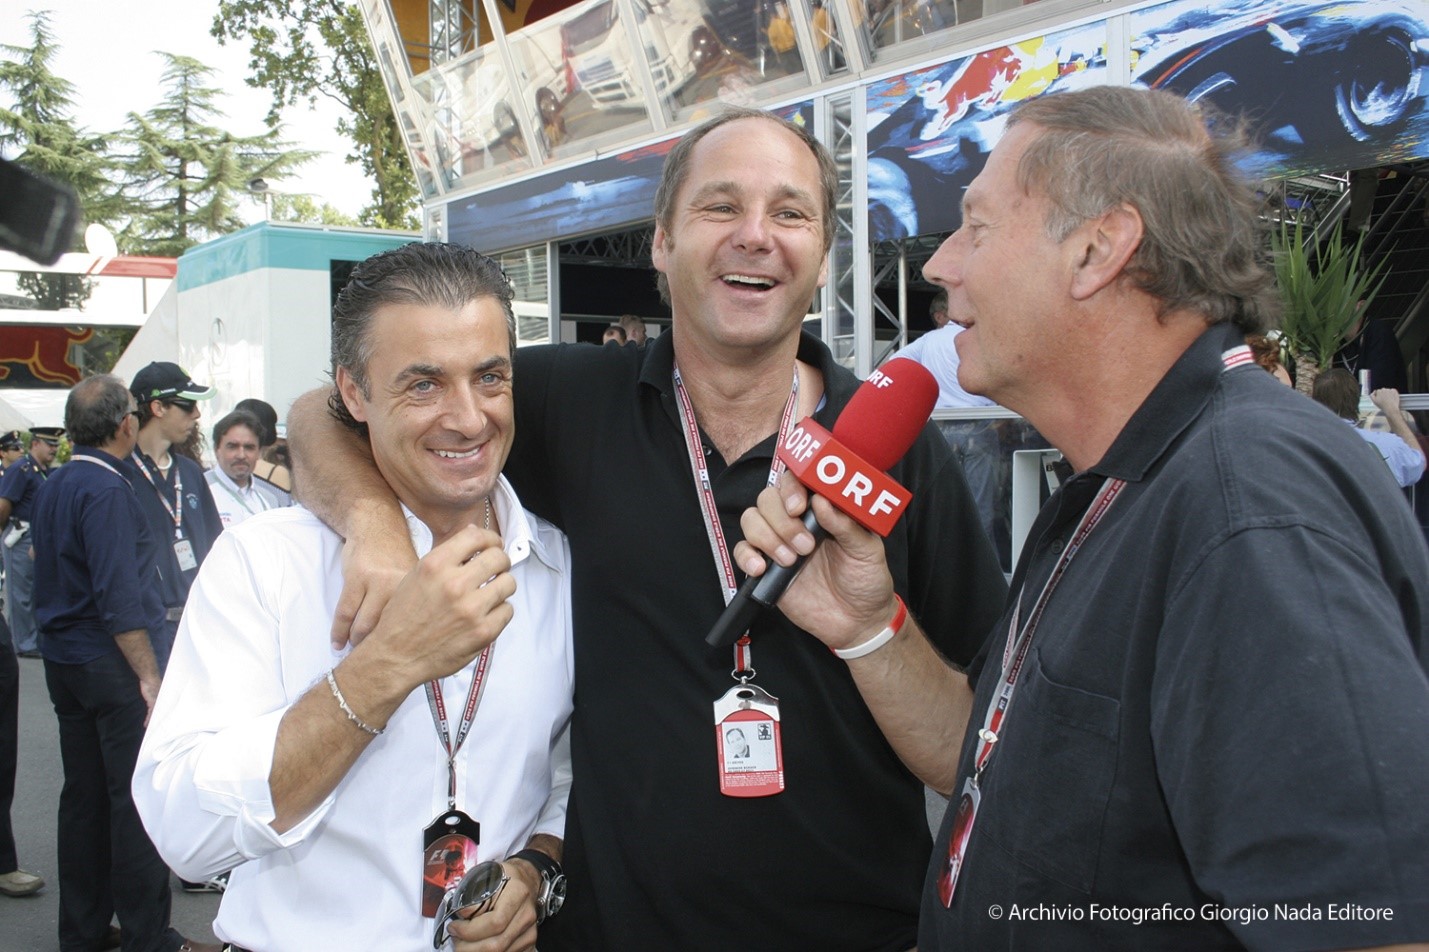 Jean Alesi, Jean Todt and Gerhard Berger.